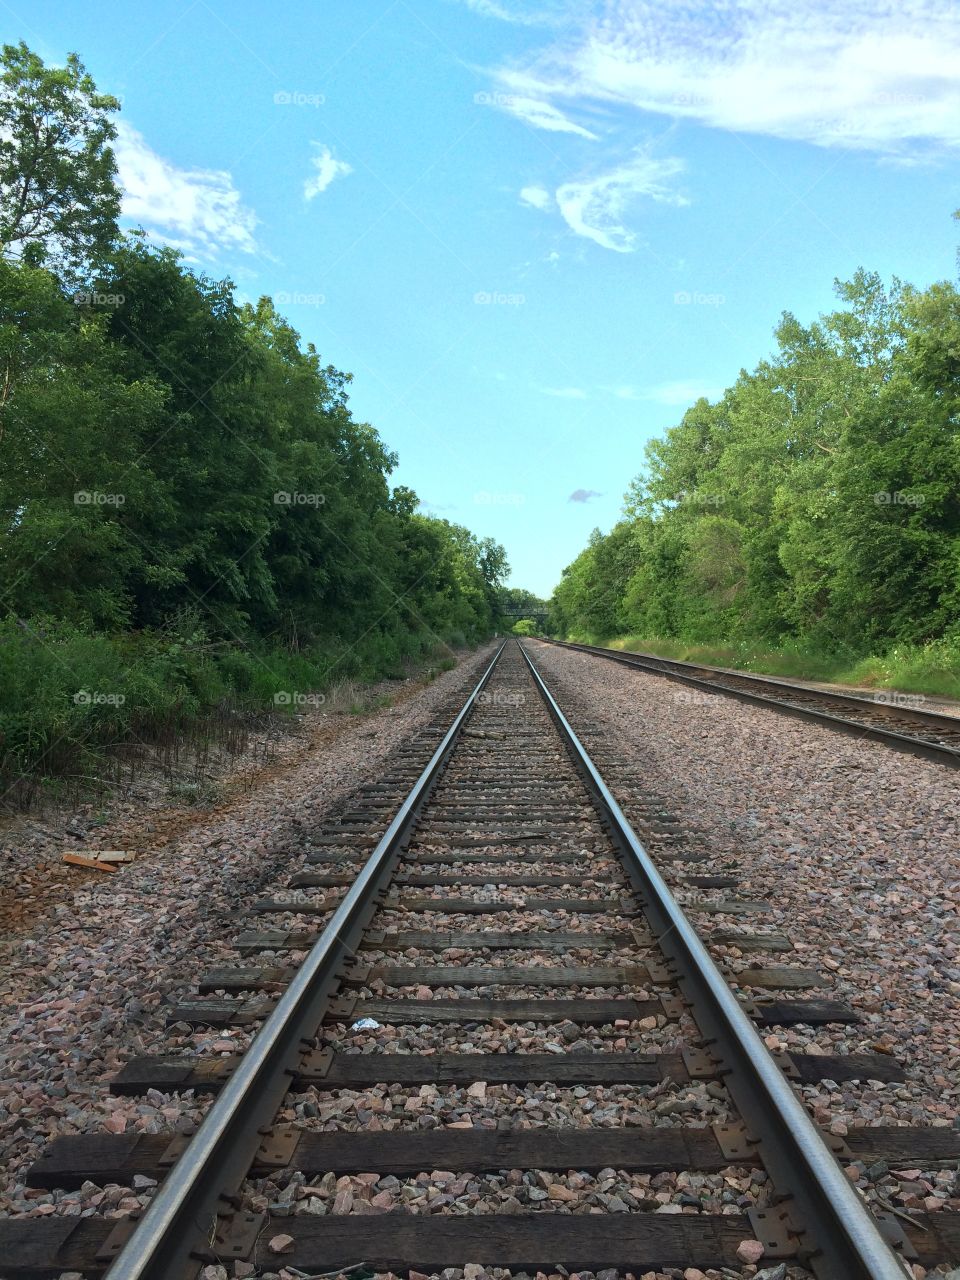 Train tracks in the wilderness 